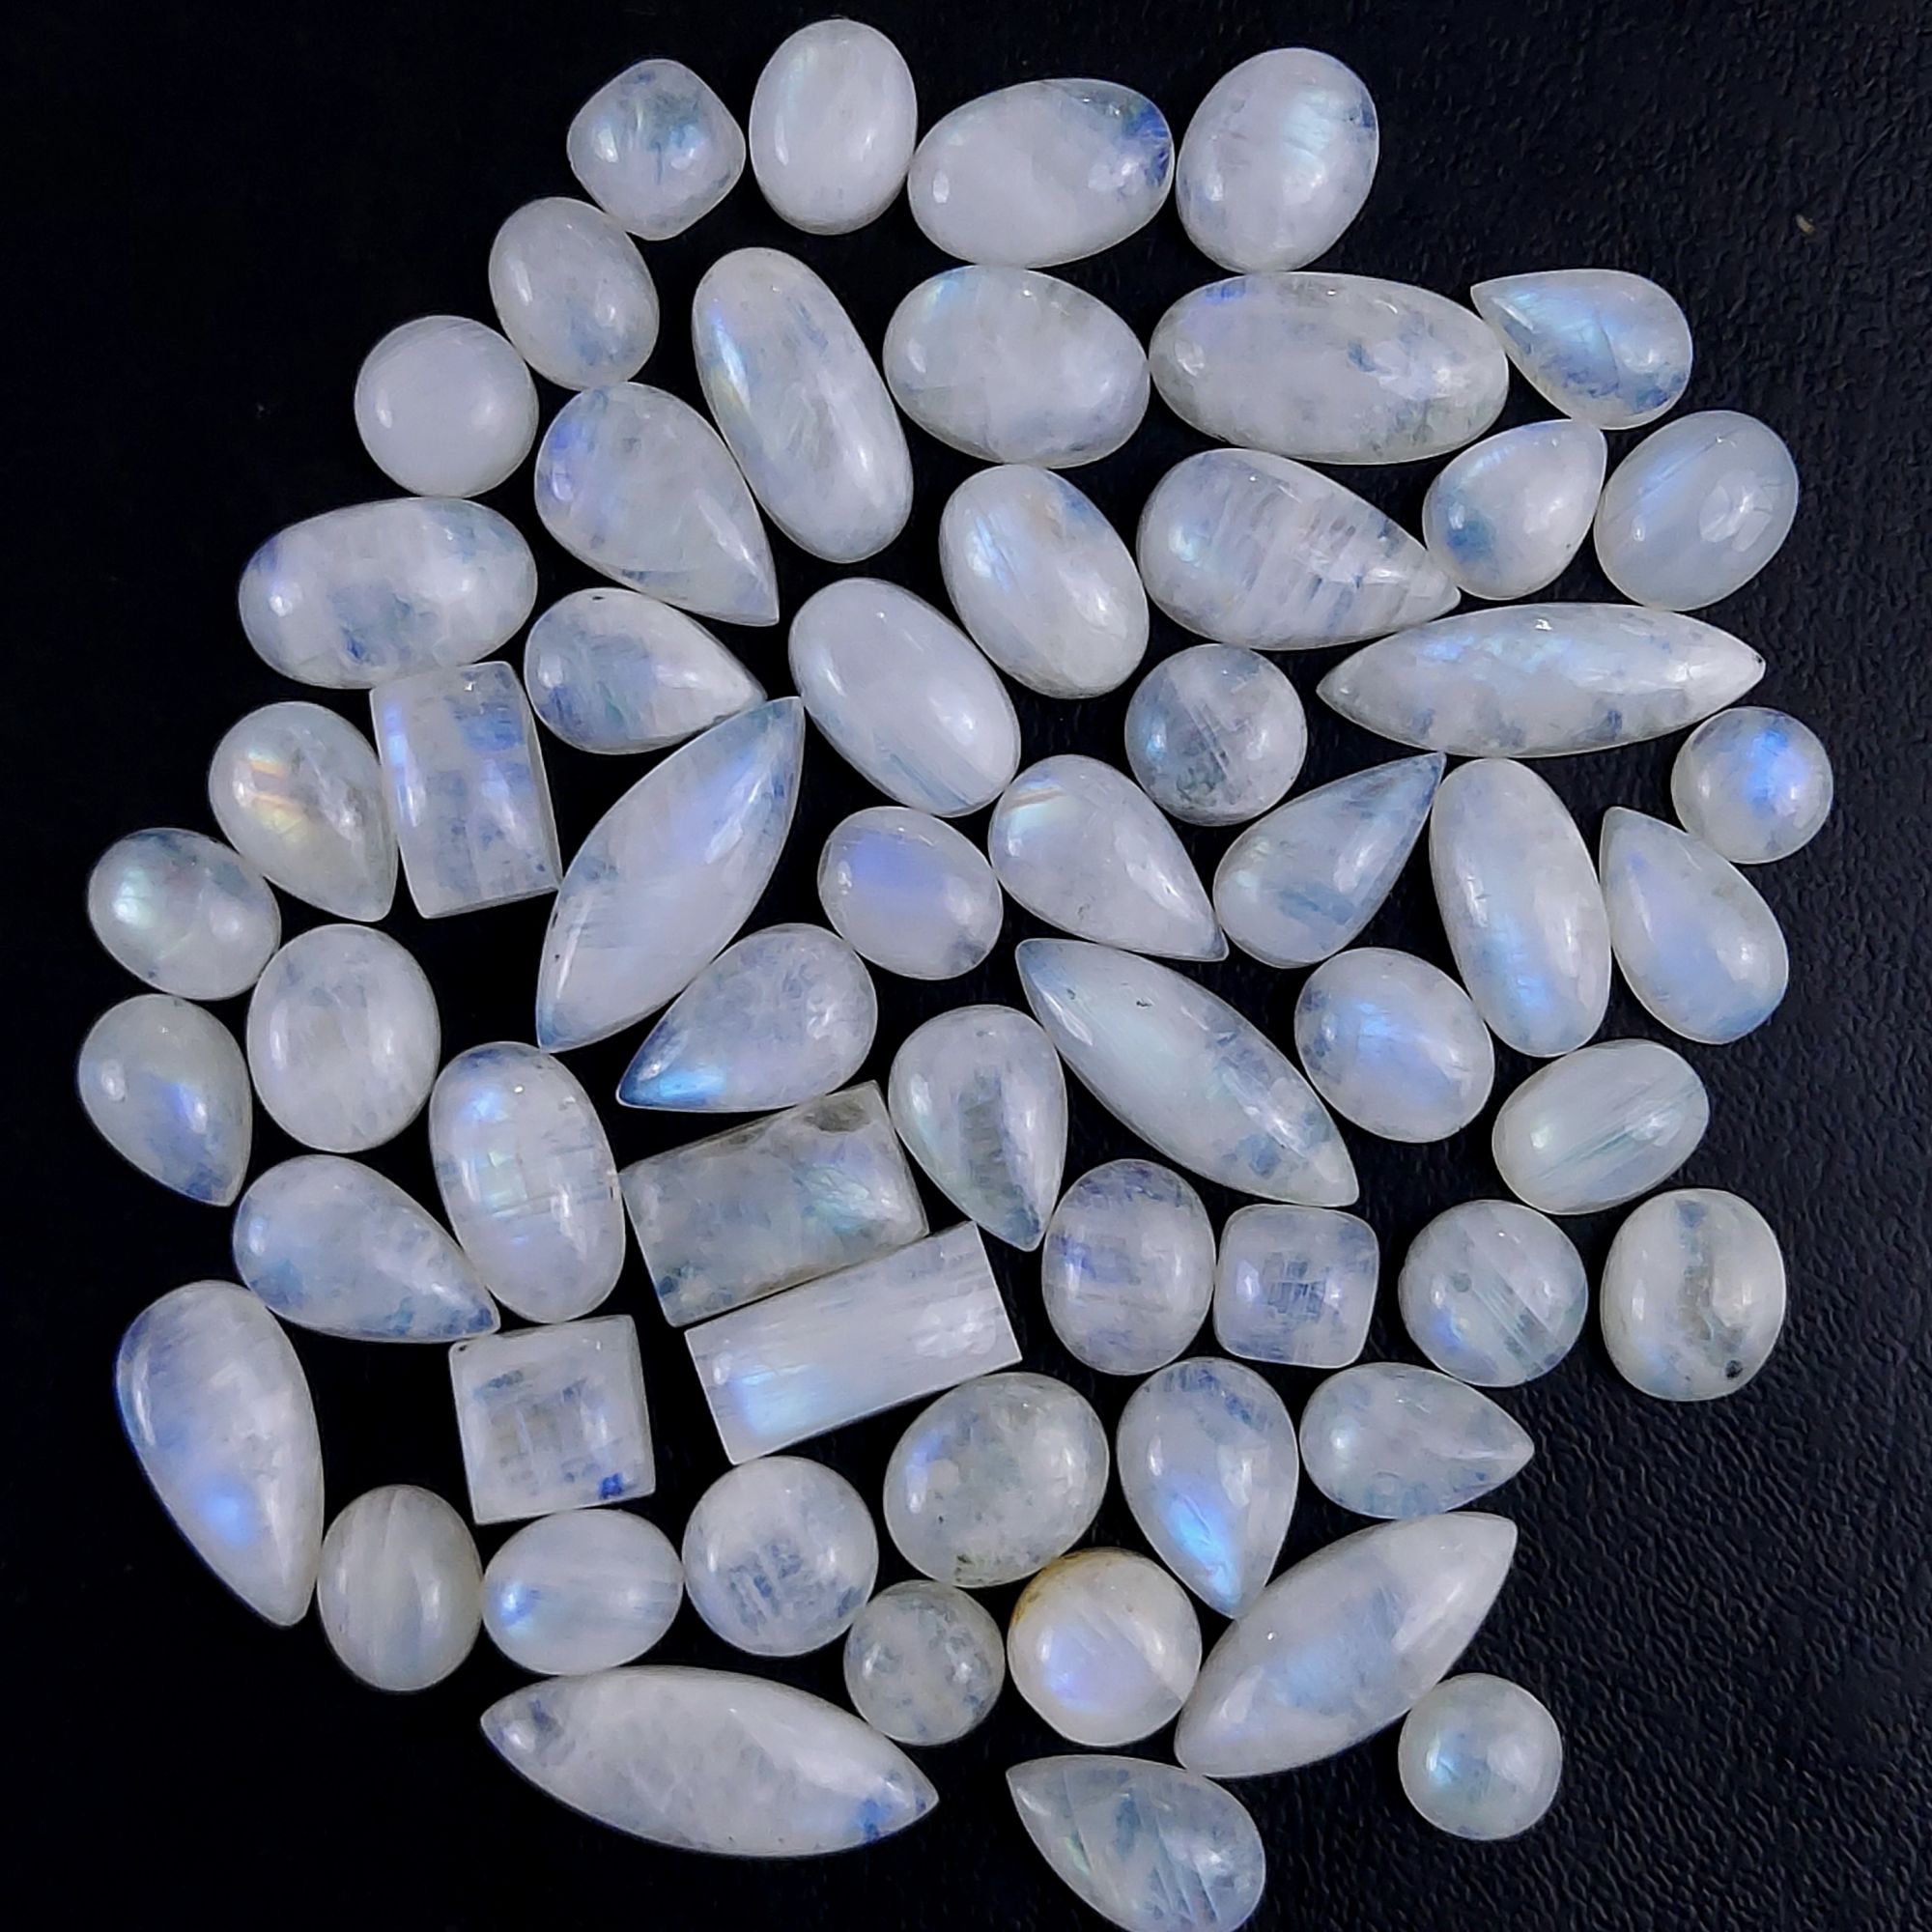 59Pcs 267Cts Natural Rainbow Cabochon Gemstone For Jewelry Making Crystal Cabochon Semi-Precious Rainbow Moonstone Flat Back Gemstone Lot 23x9 8x8mm#716